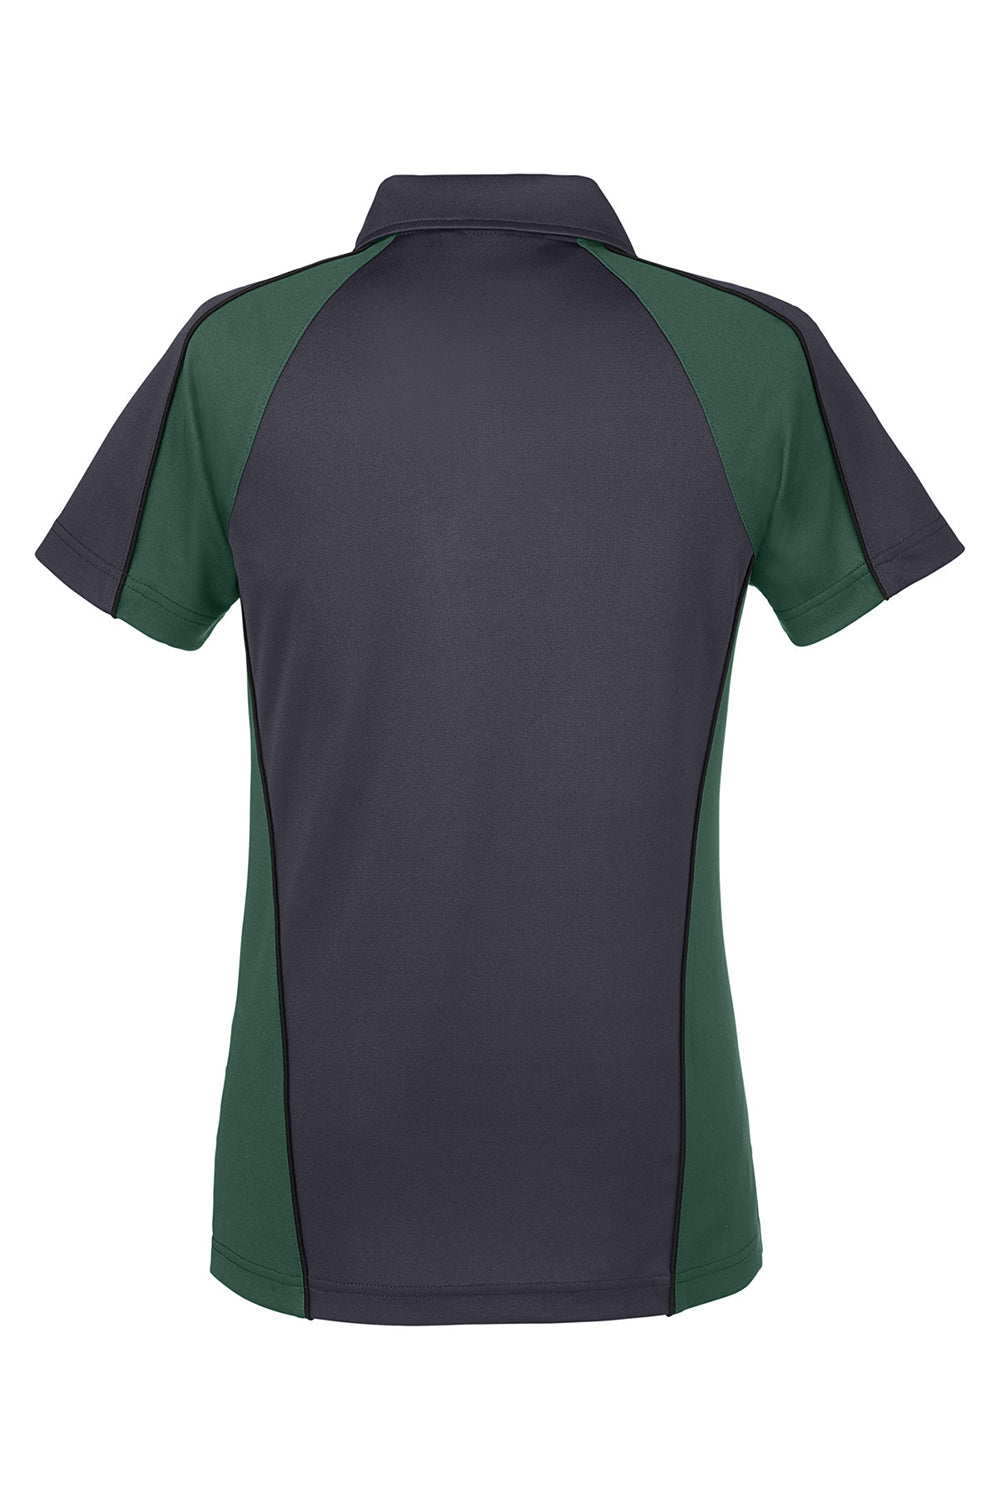 Harriton M385W Womens Advantage Performance Moisture Wicking Colorblock Short Sleeve Polo Shirt Dark Charcoal Grey/Dark Green Flat Back